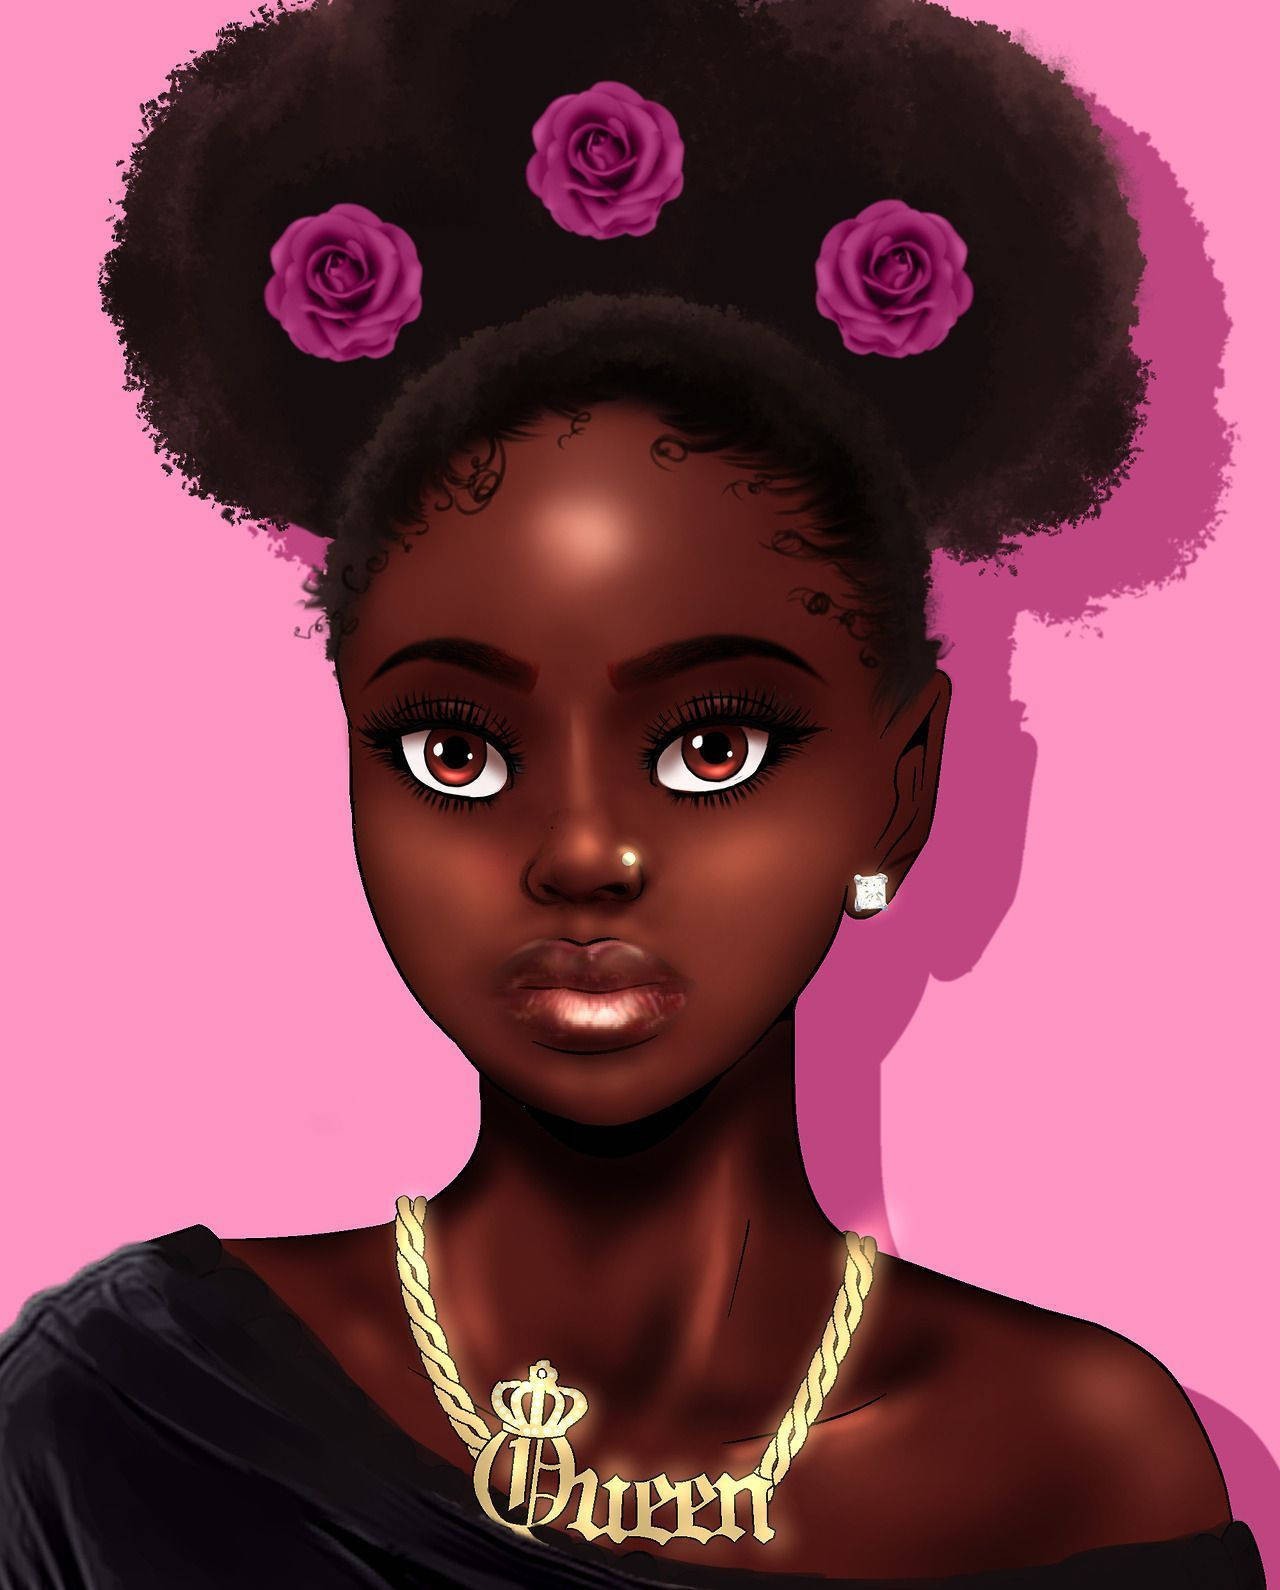 Queen Beautiful Black Woman Art Picture